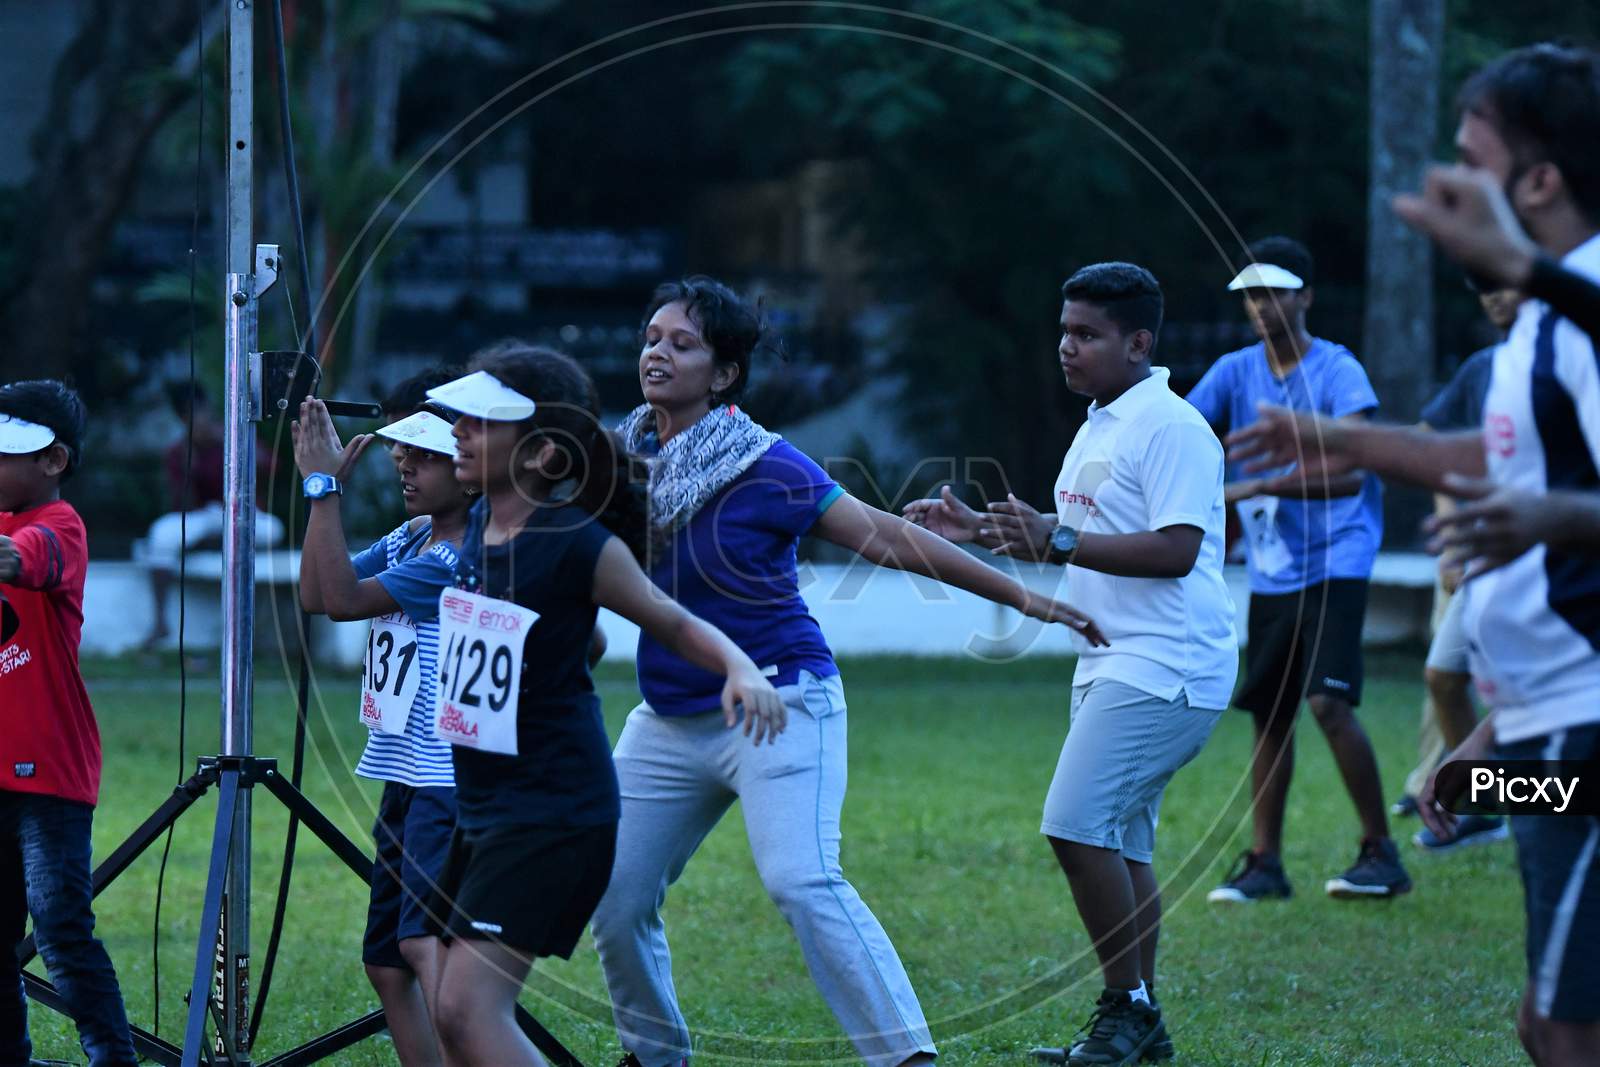 15 September 2018 Participants Of The Run For New Kerala Mini Marathon Emak At Durbar Hall Ground At Kochi